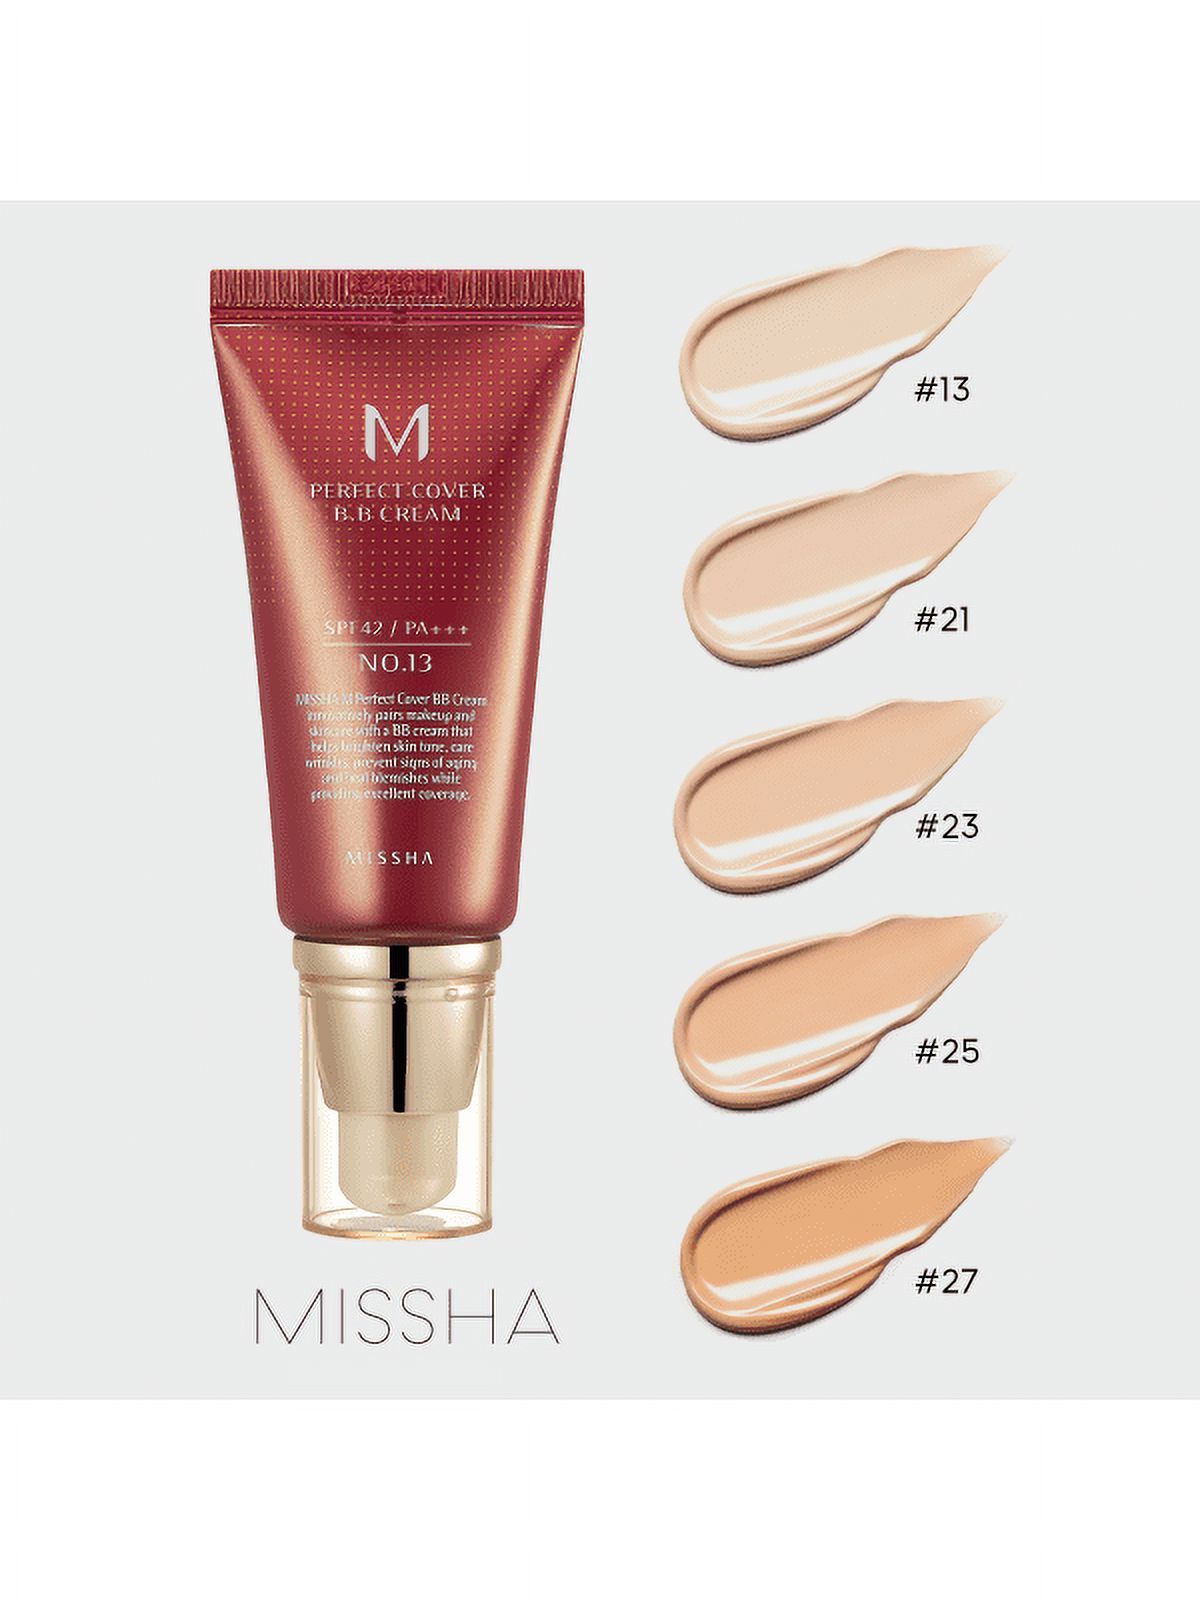 Missha M Perfect Cover BB Cream SPF42, PA #23 - Natural Beige, 1.69 fl oz | Walmart (US)